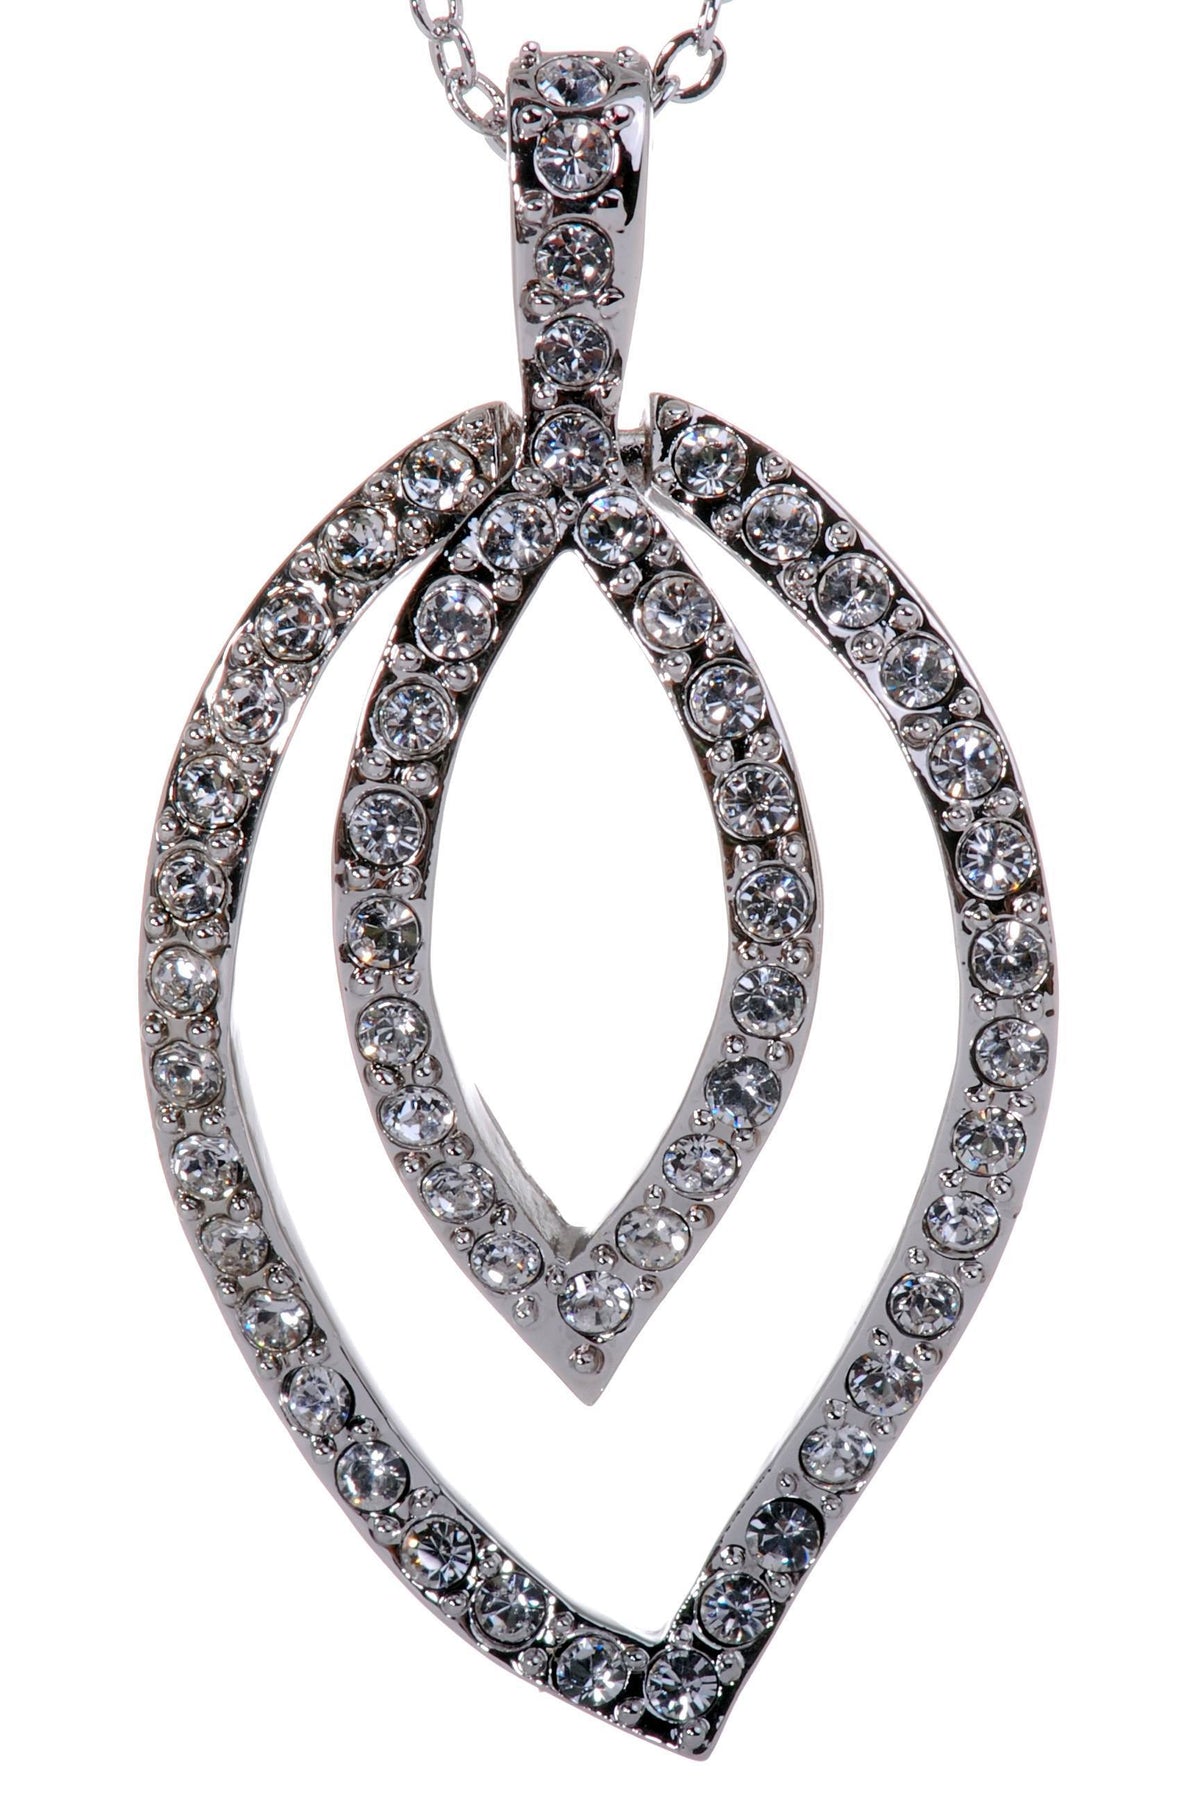 N7127 Rhodium Swarovski Elements Leaf Pendant Necklace